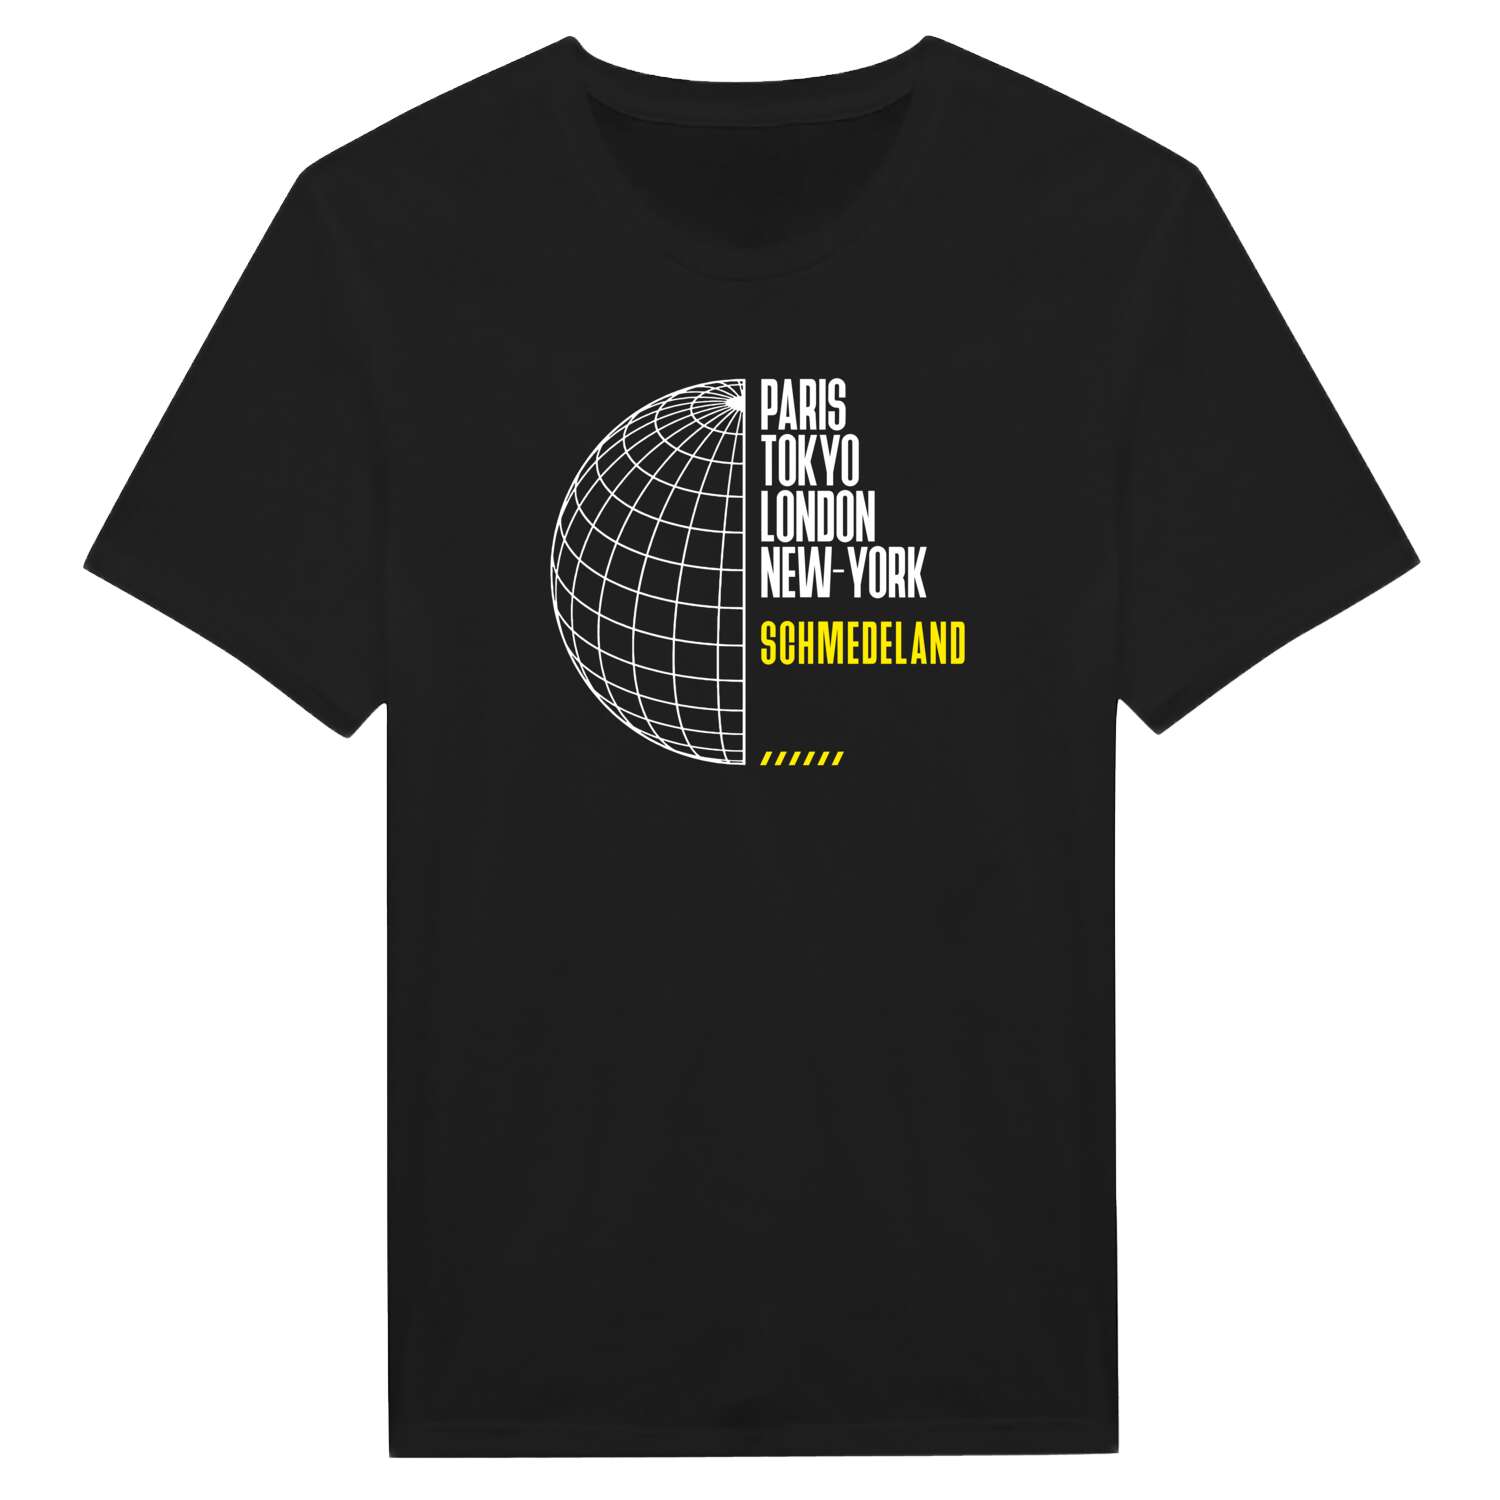 Schmedeland T-Shirt »Paris Tokyo London«